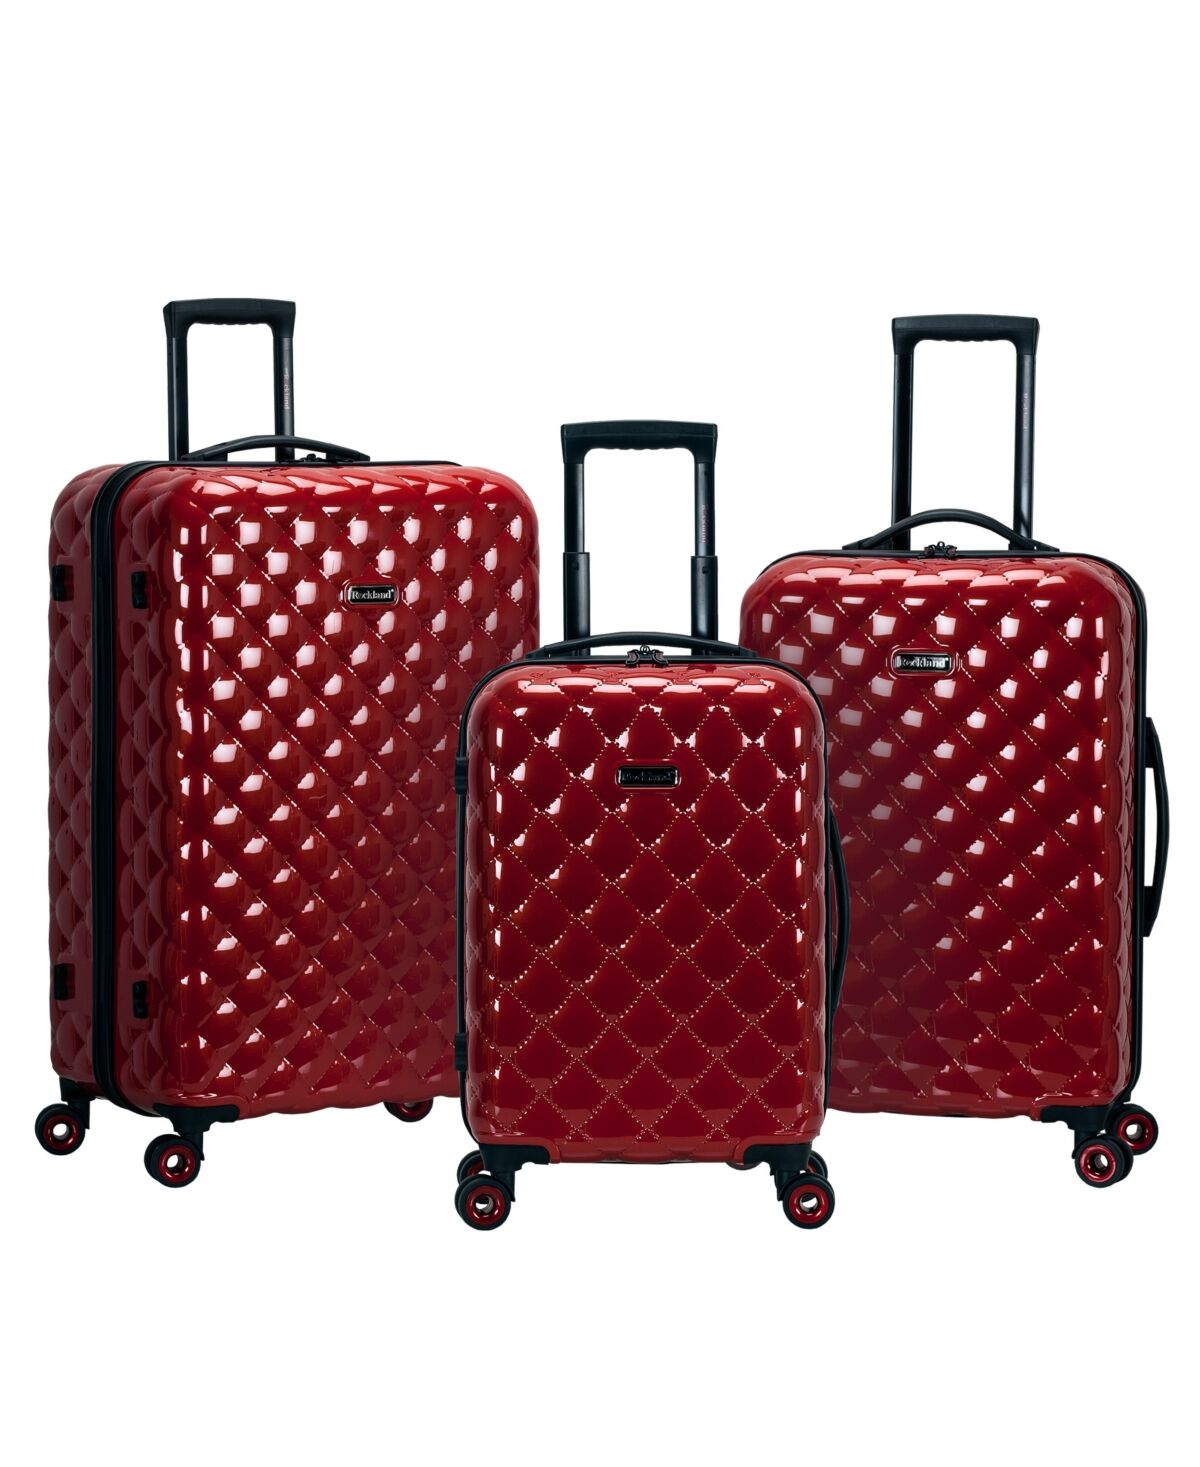 Rockland Quilt 3-Pc. Hardside Luggage Set - Red